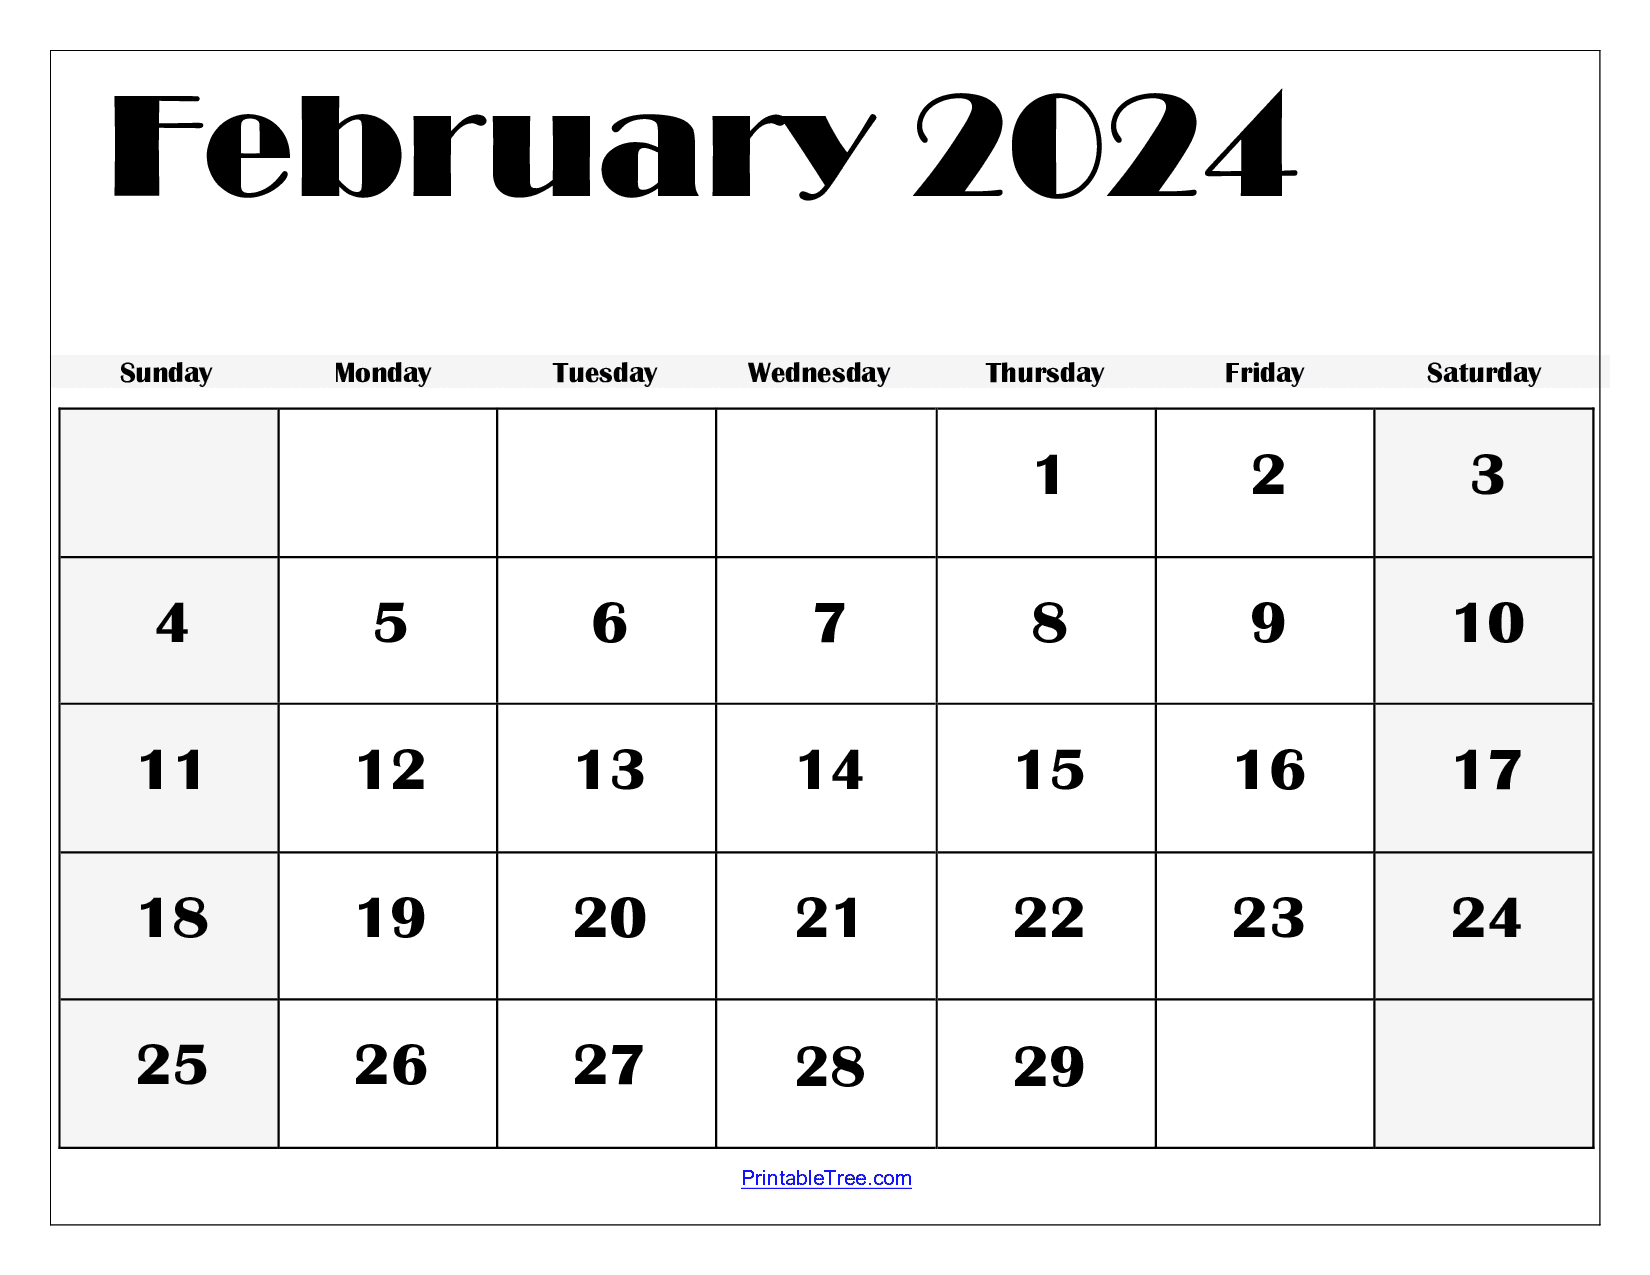 February 2024 Calendar Printable Pdf Template With Holidays for 2024 Calendar Printable February